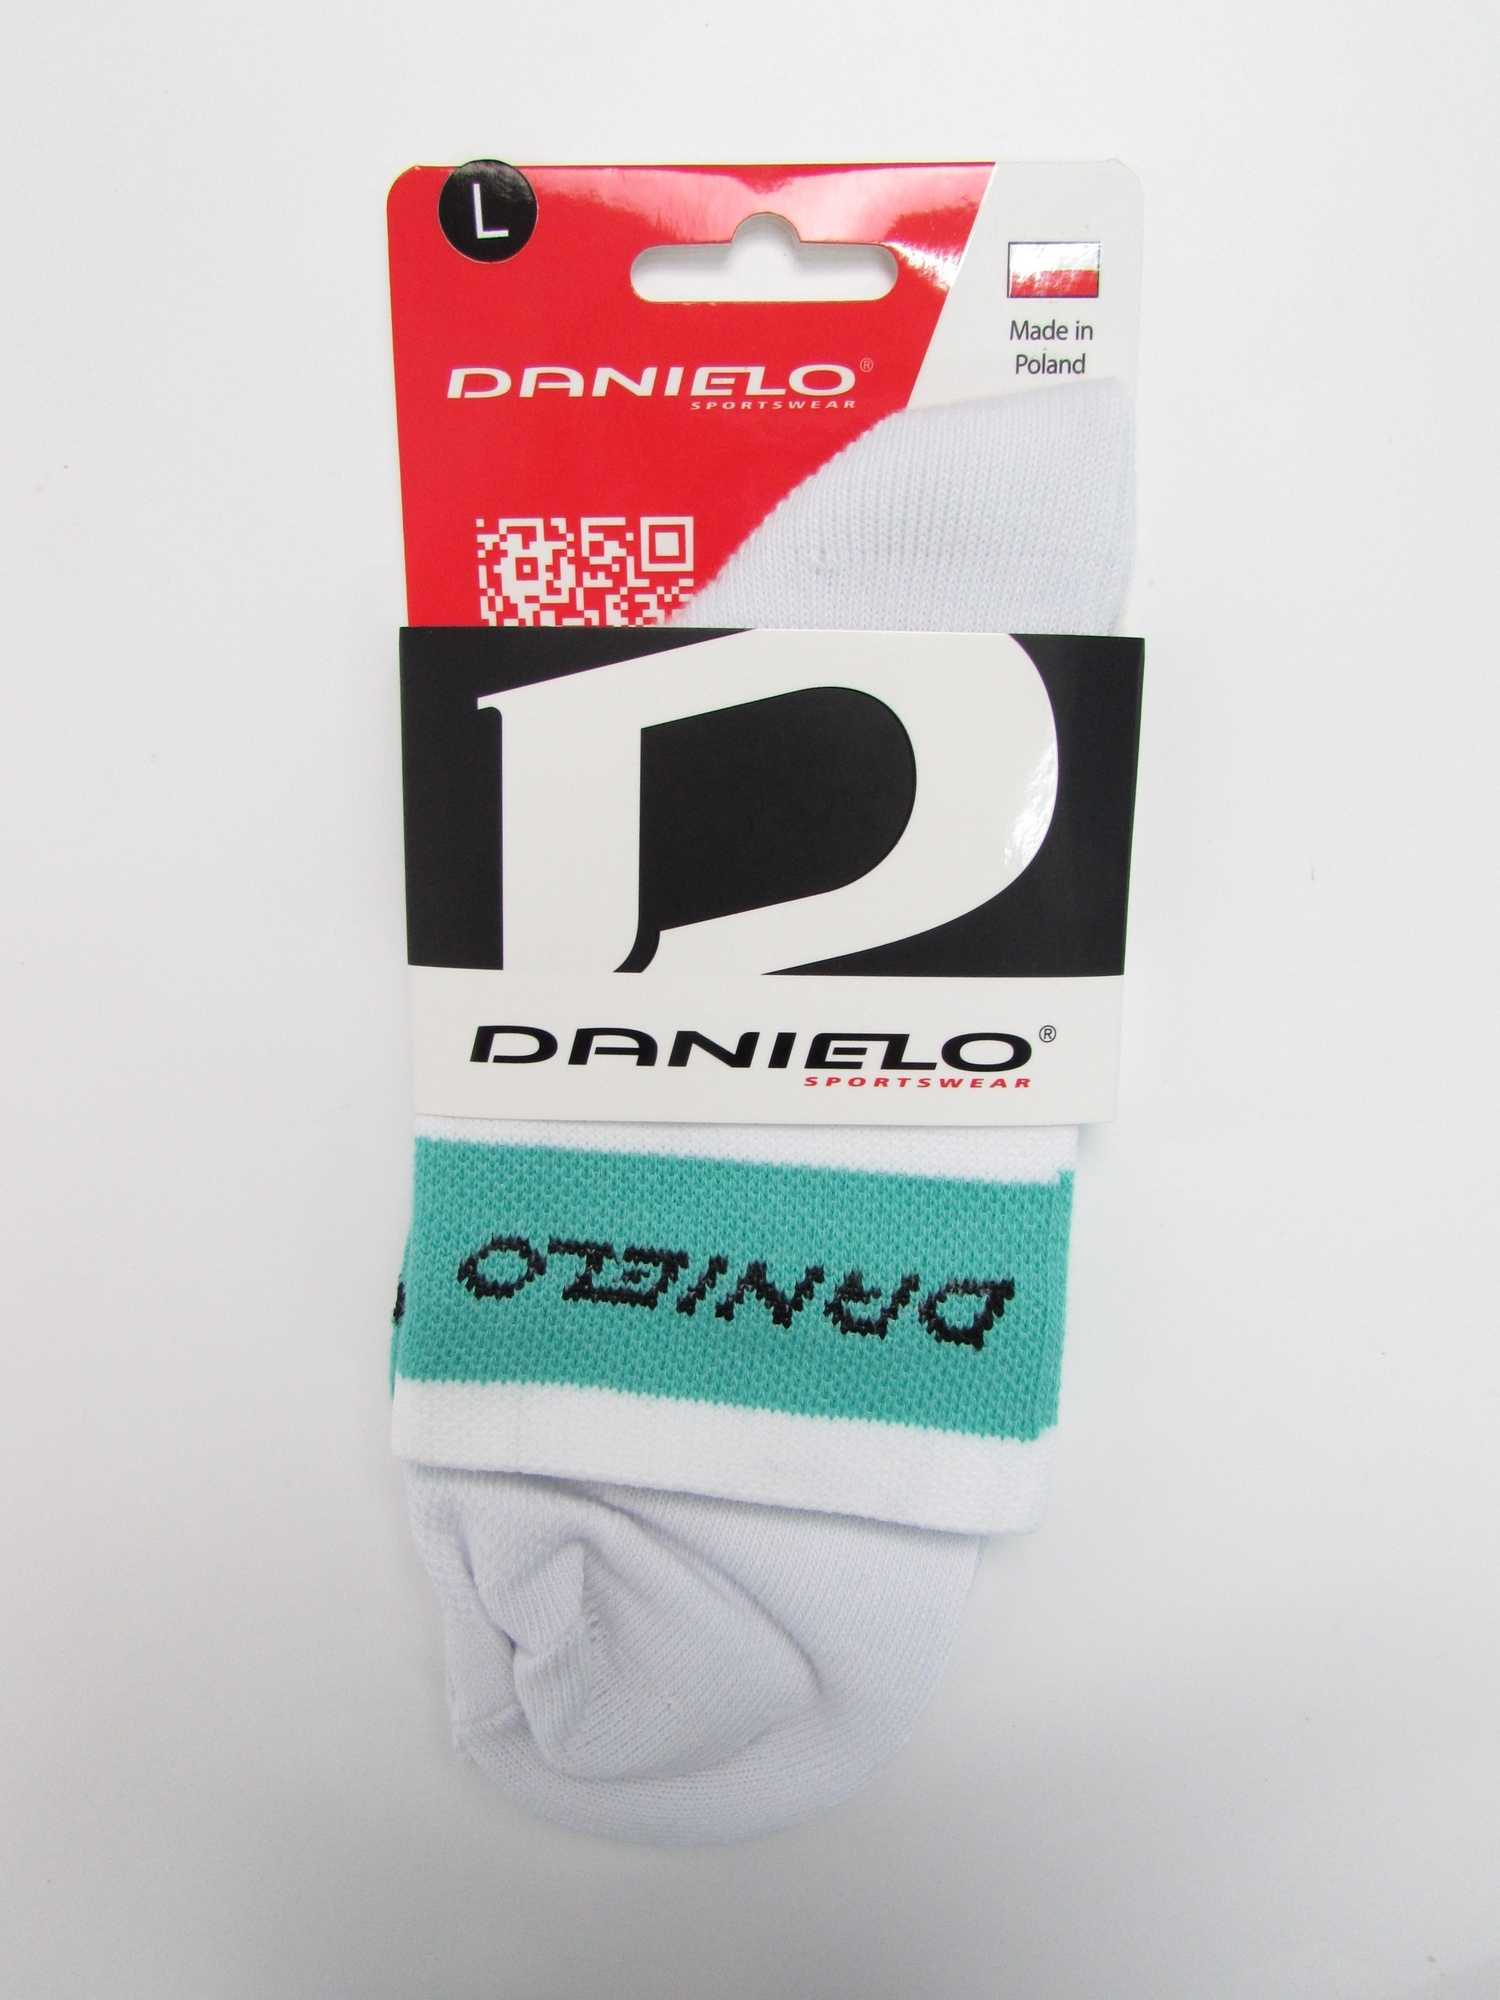 Danielo Professional Cycling Socks white/green size 45-46 (XL)